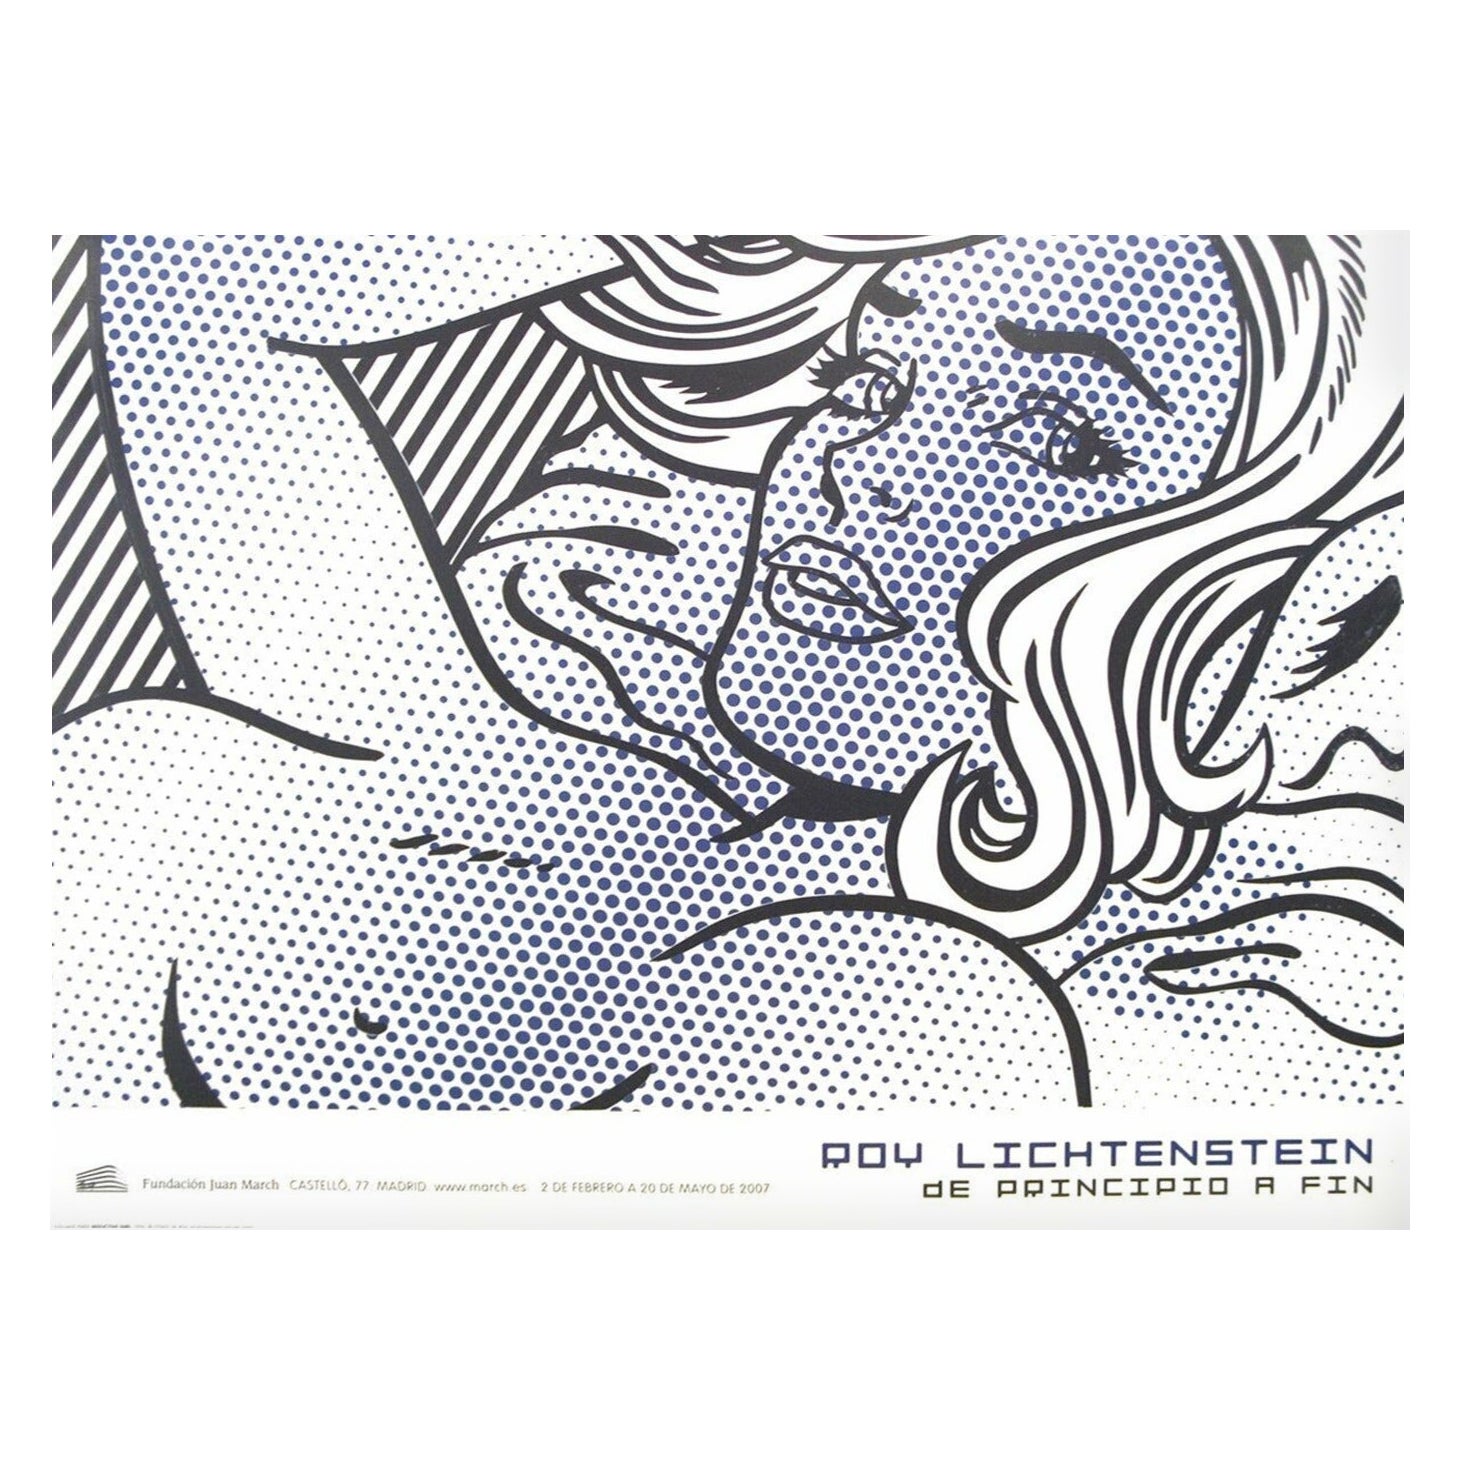 2007 Roy Lichtenstein - Ragazza seducente - Fundacion Juan March Poster originale in vendita